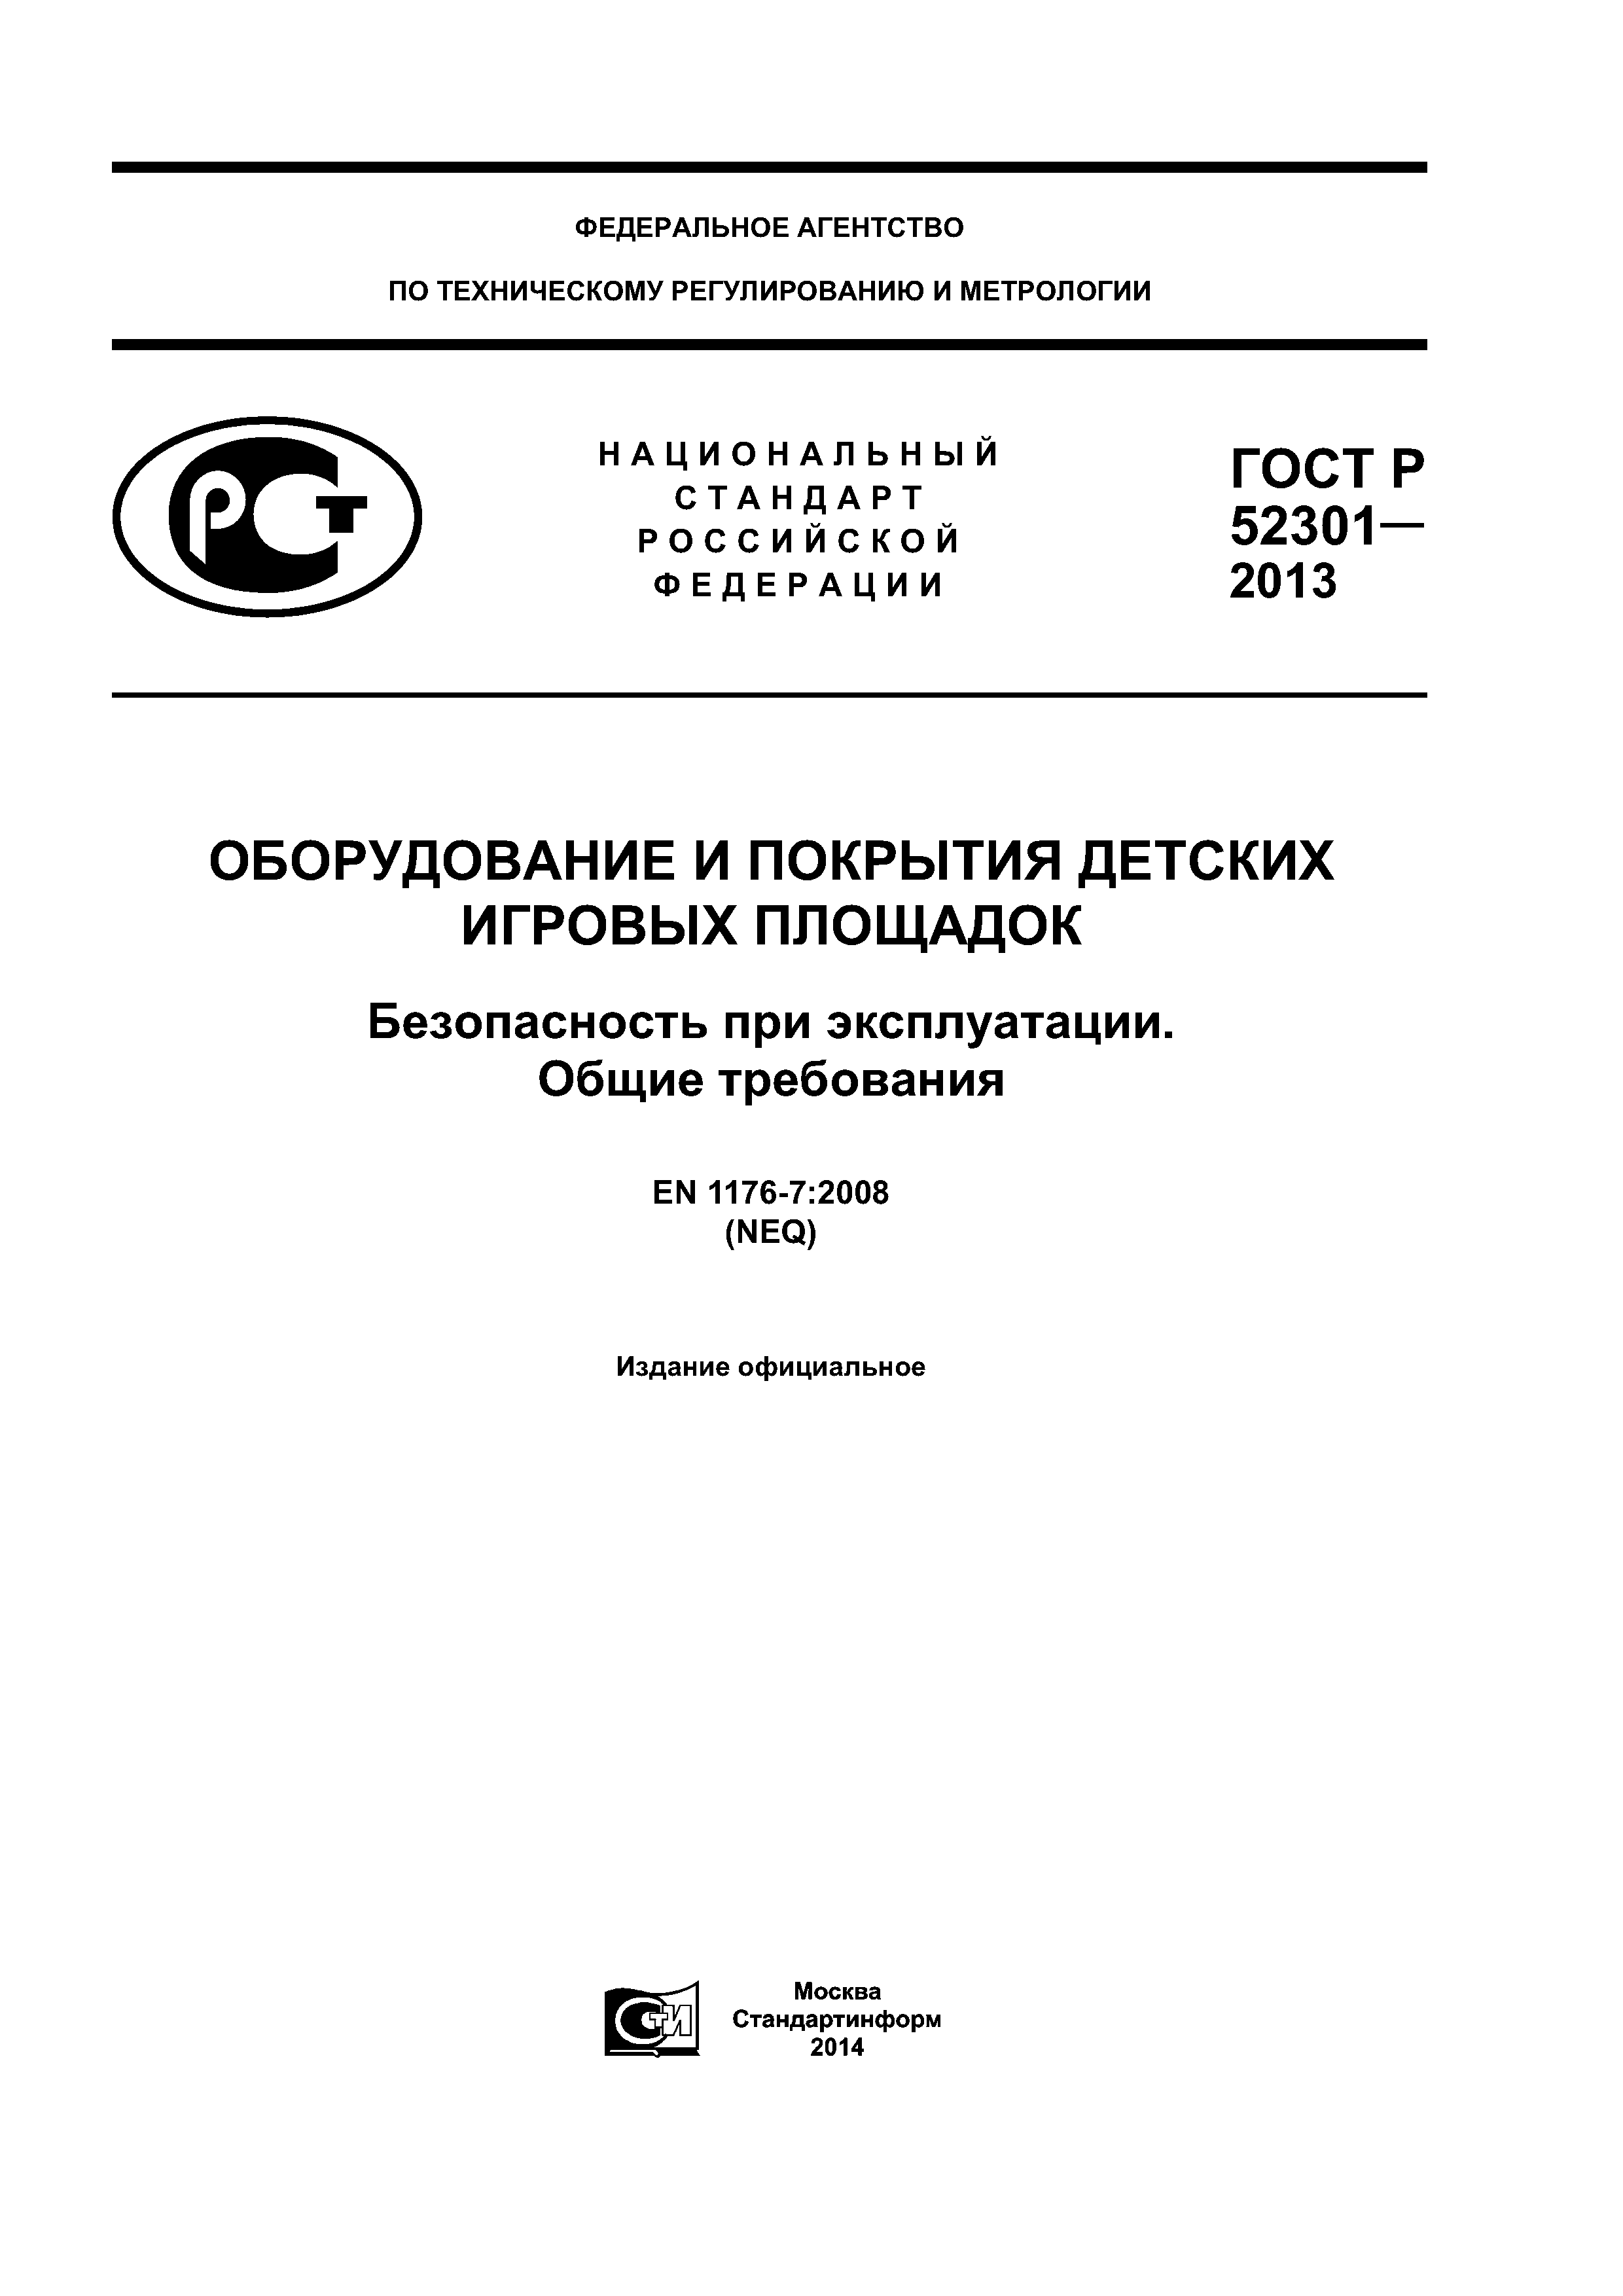 ГОСТ Р 52301-2013